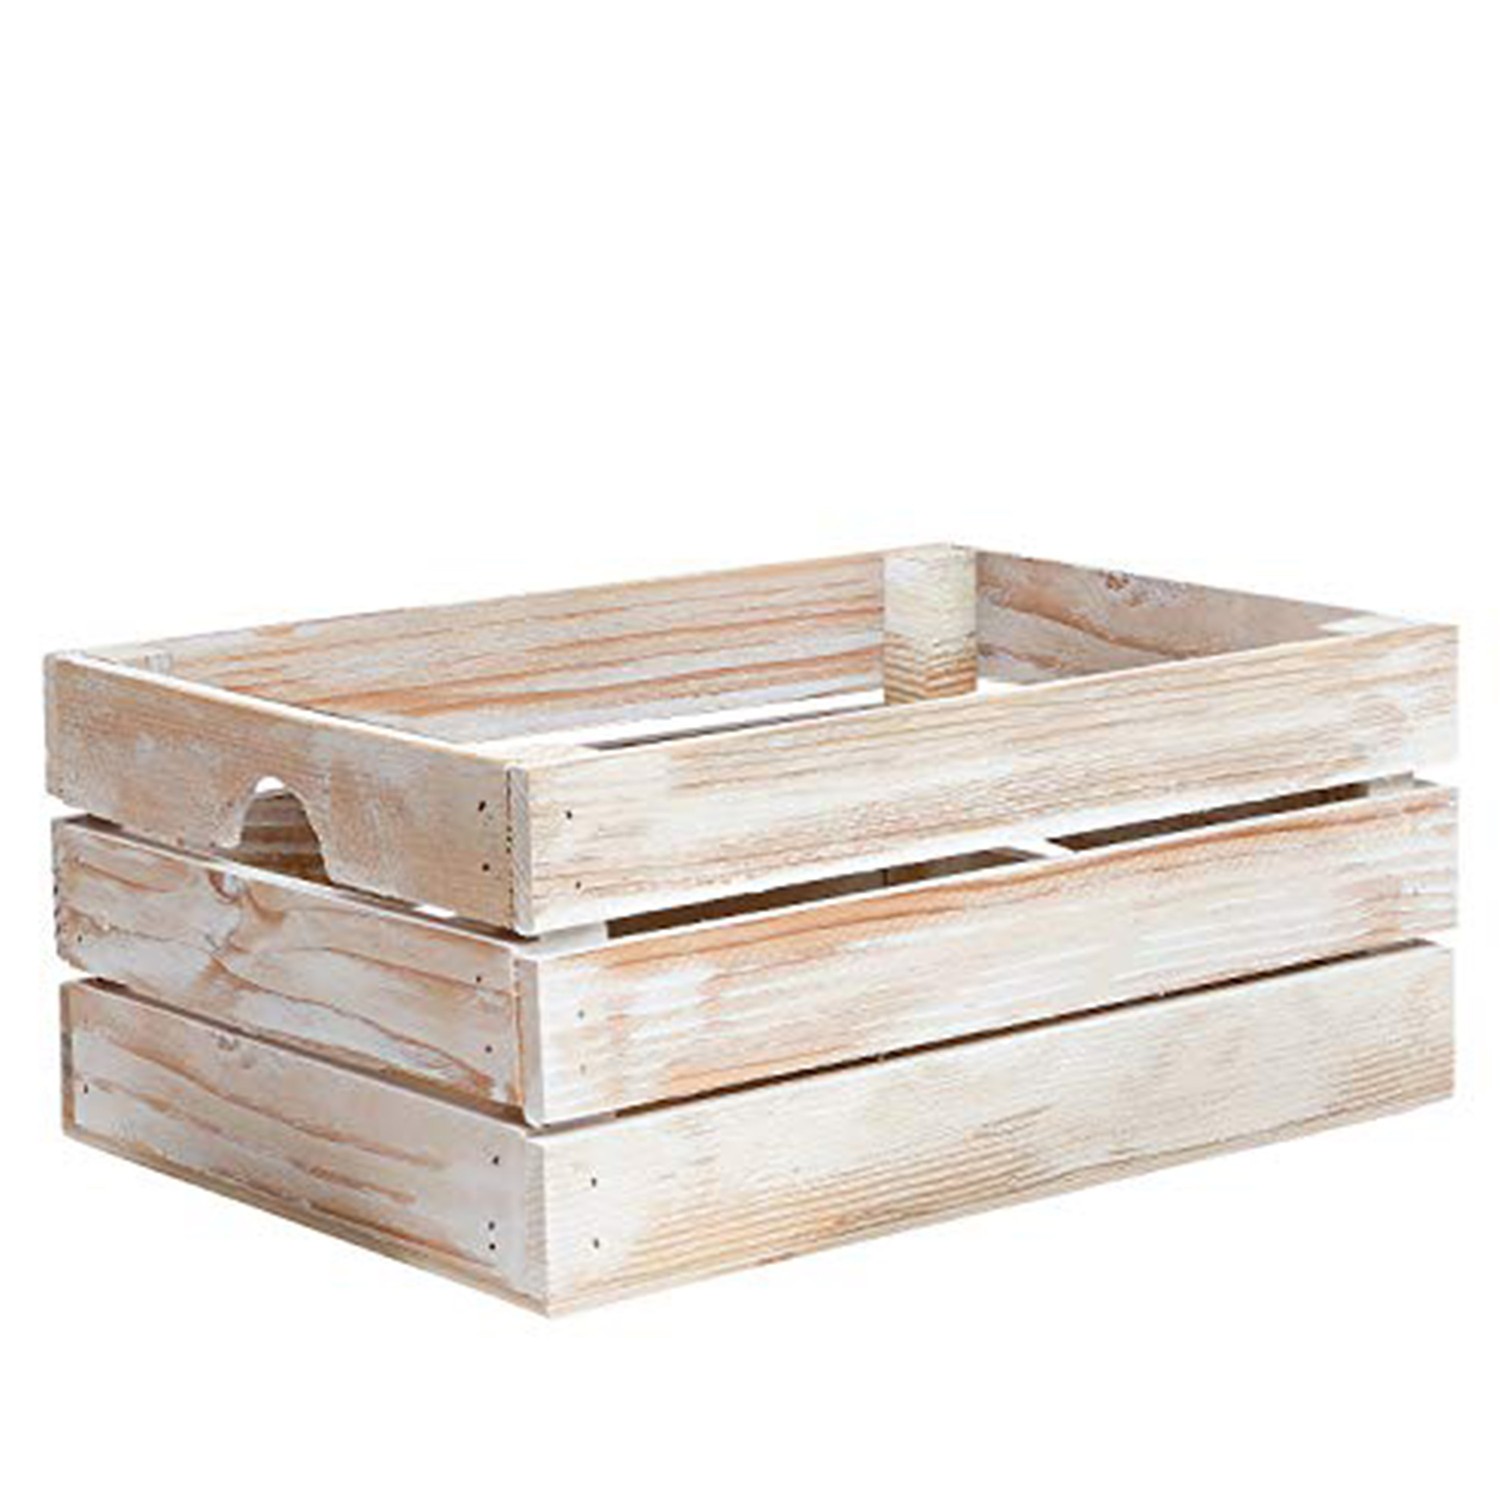 12" Organic Whitewash and Natural Distressed Wood Stacking Milk Crate